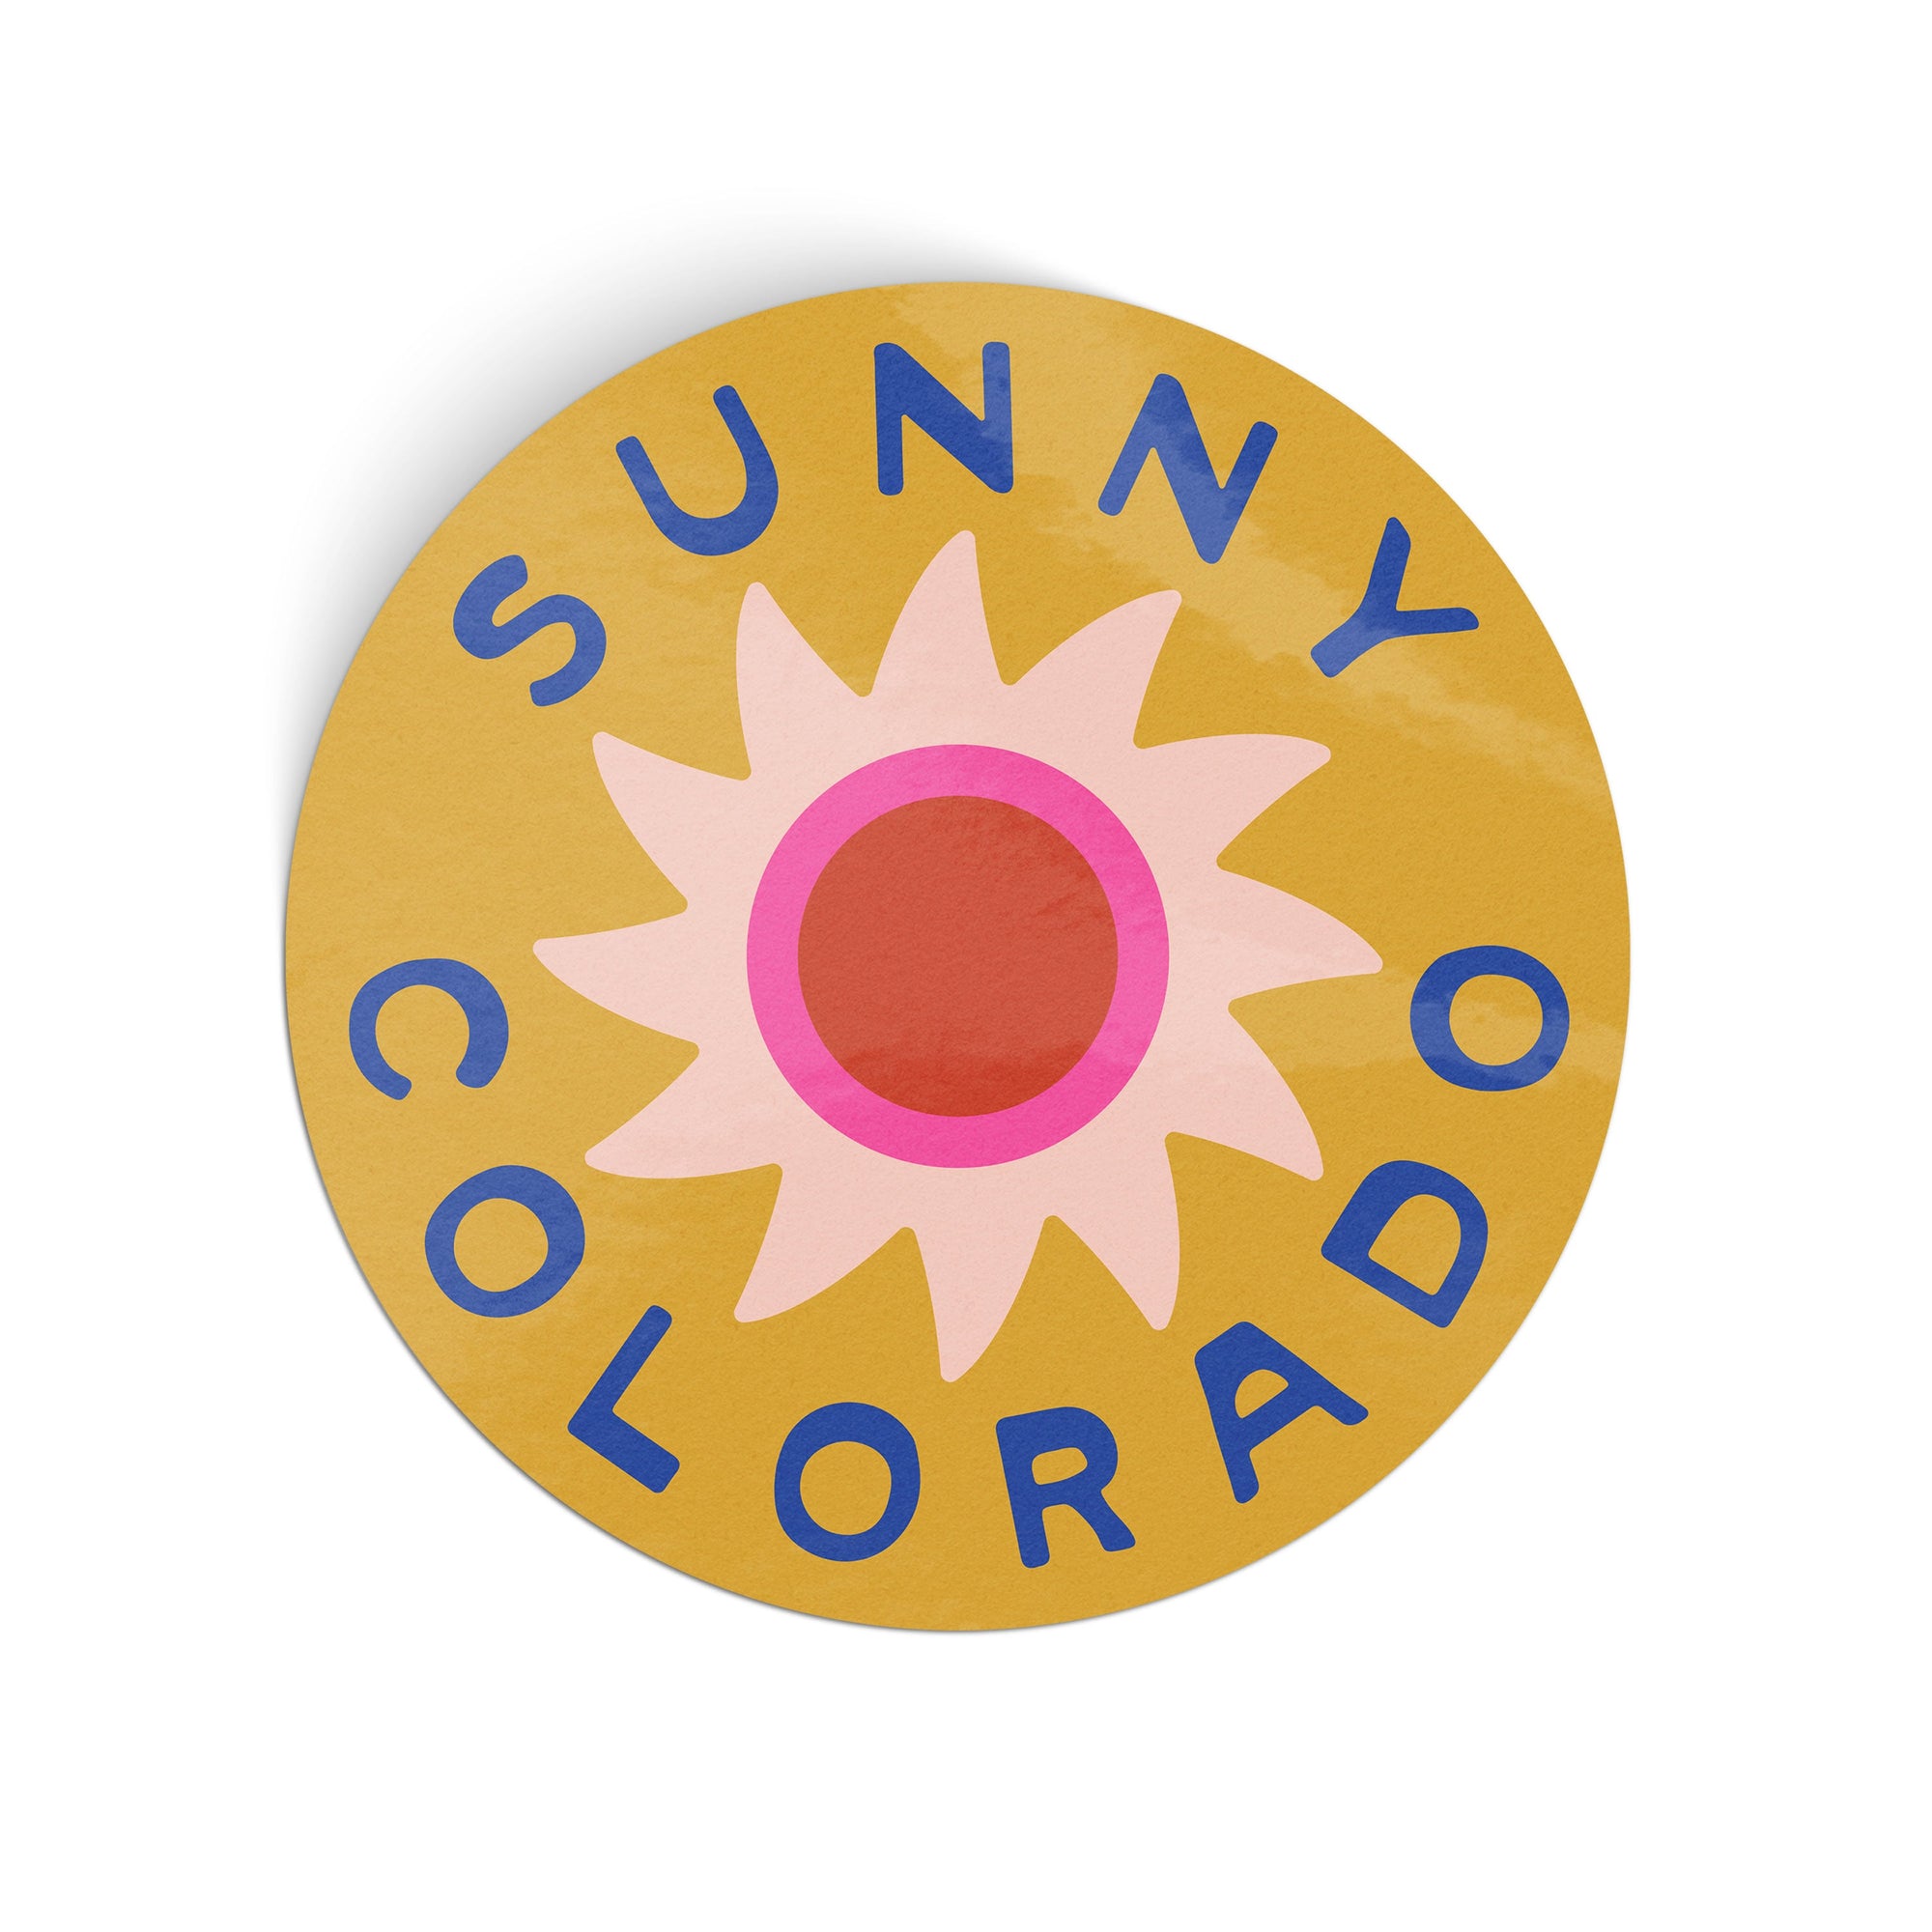 Sunny Colorado Glossy Vinyl Sticker